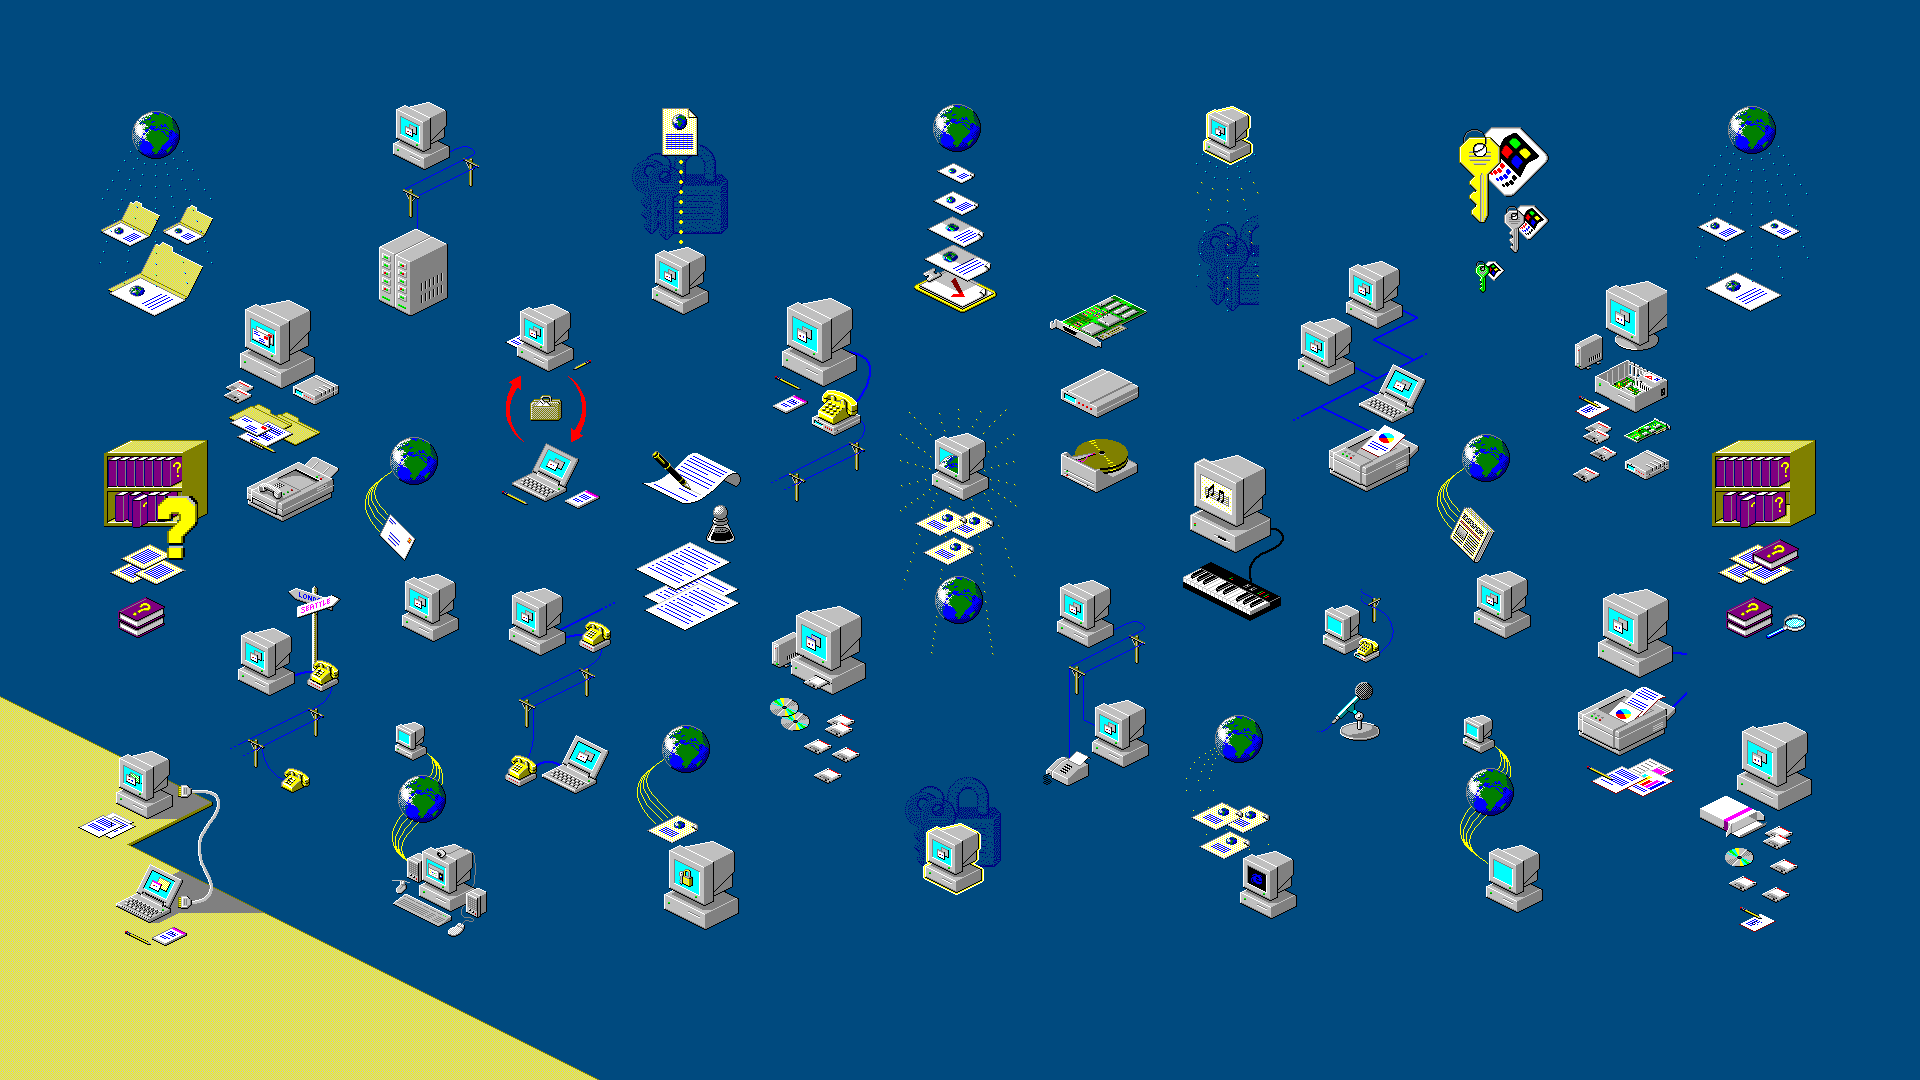 Windows 98 Background